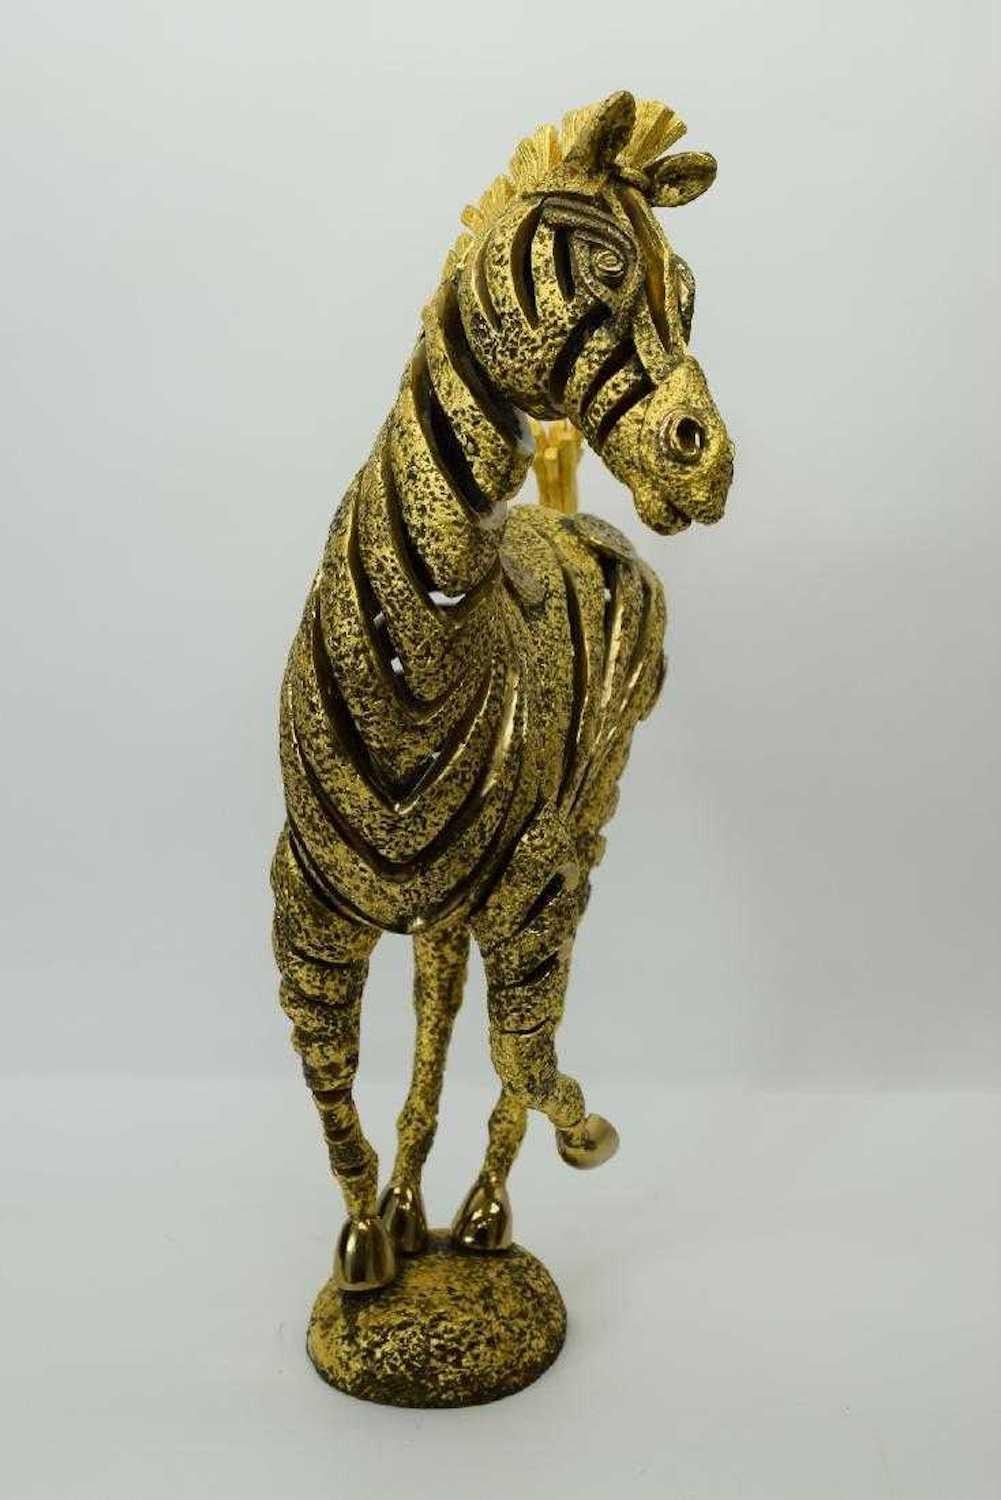 Jiang Golden Brozne Zebra Bronze Sculpture Contemporary Art For Sale 2